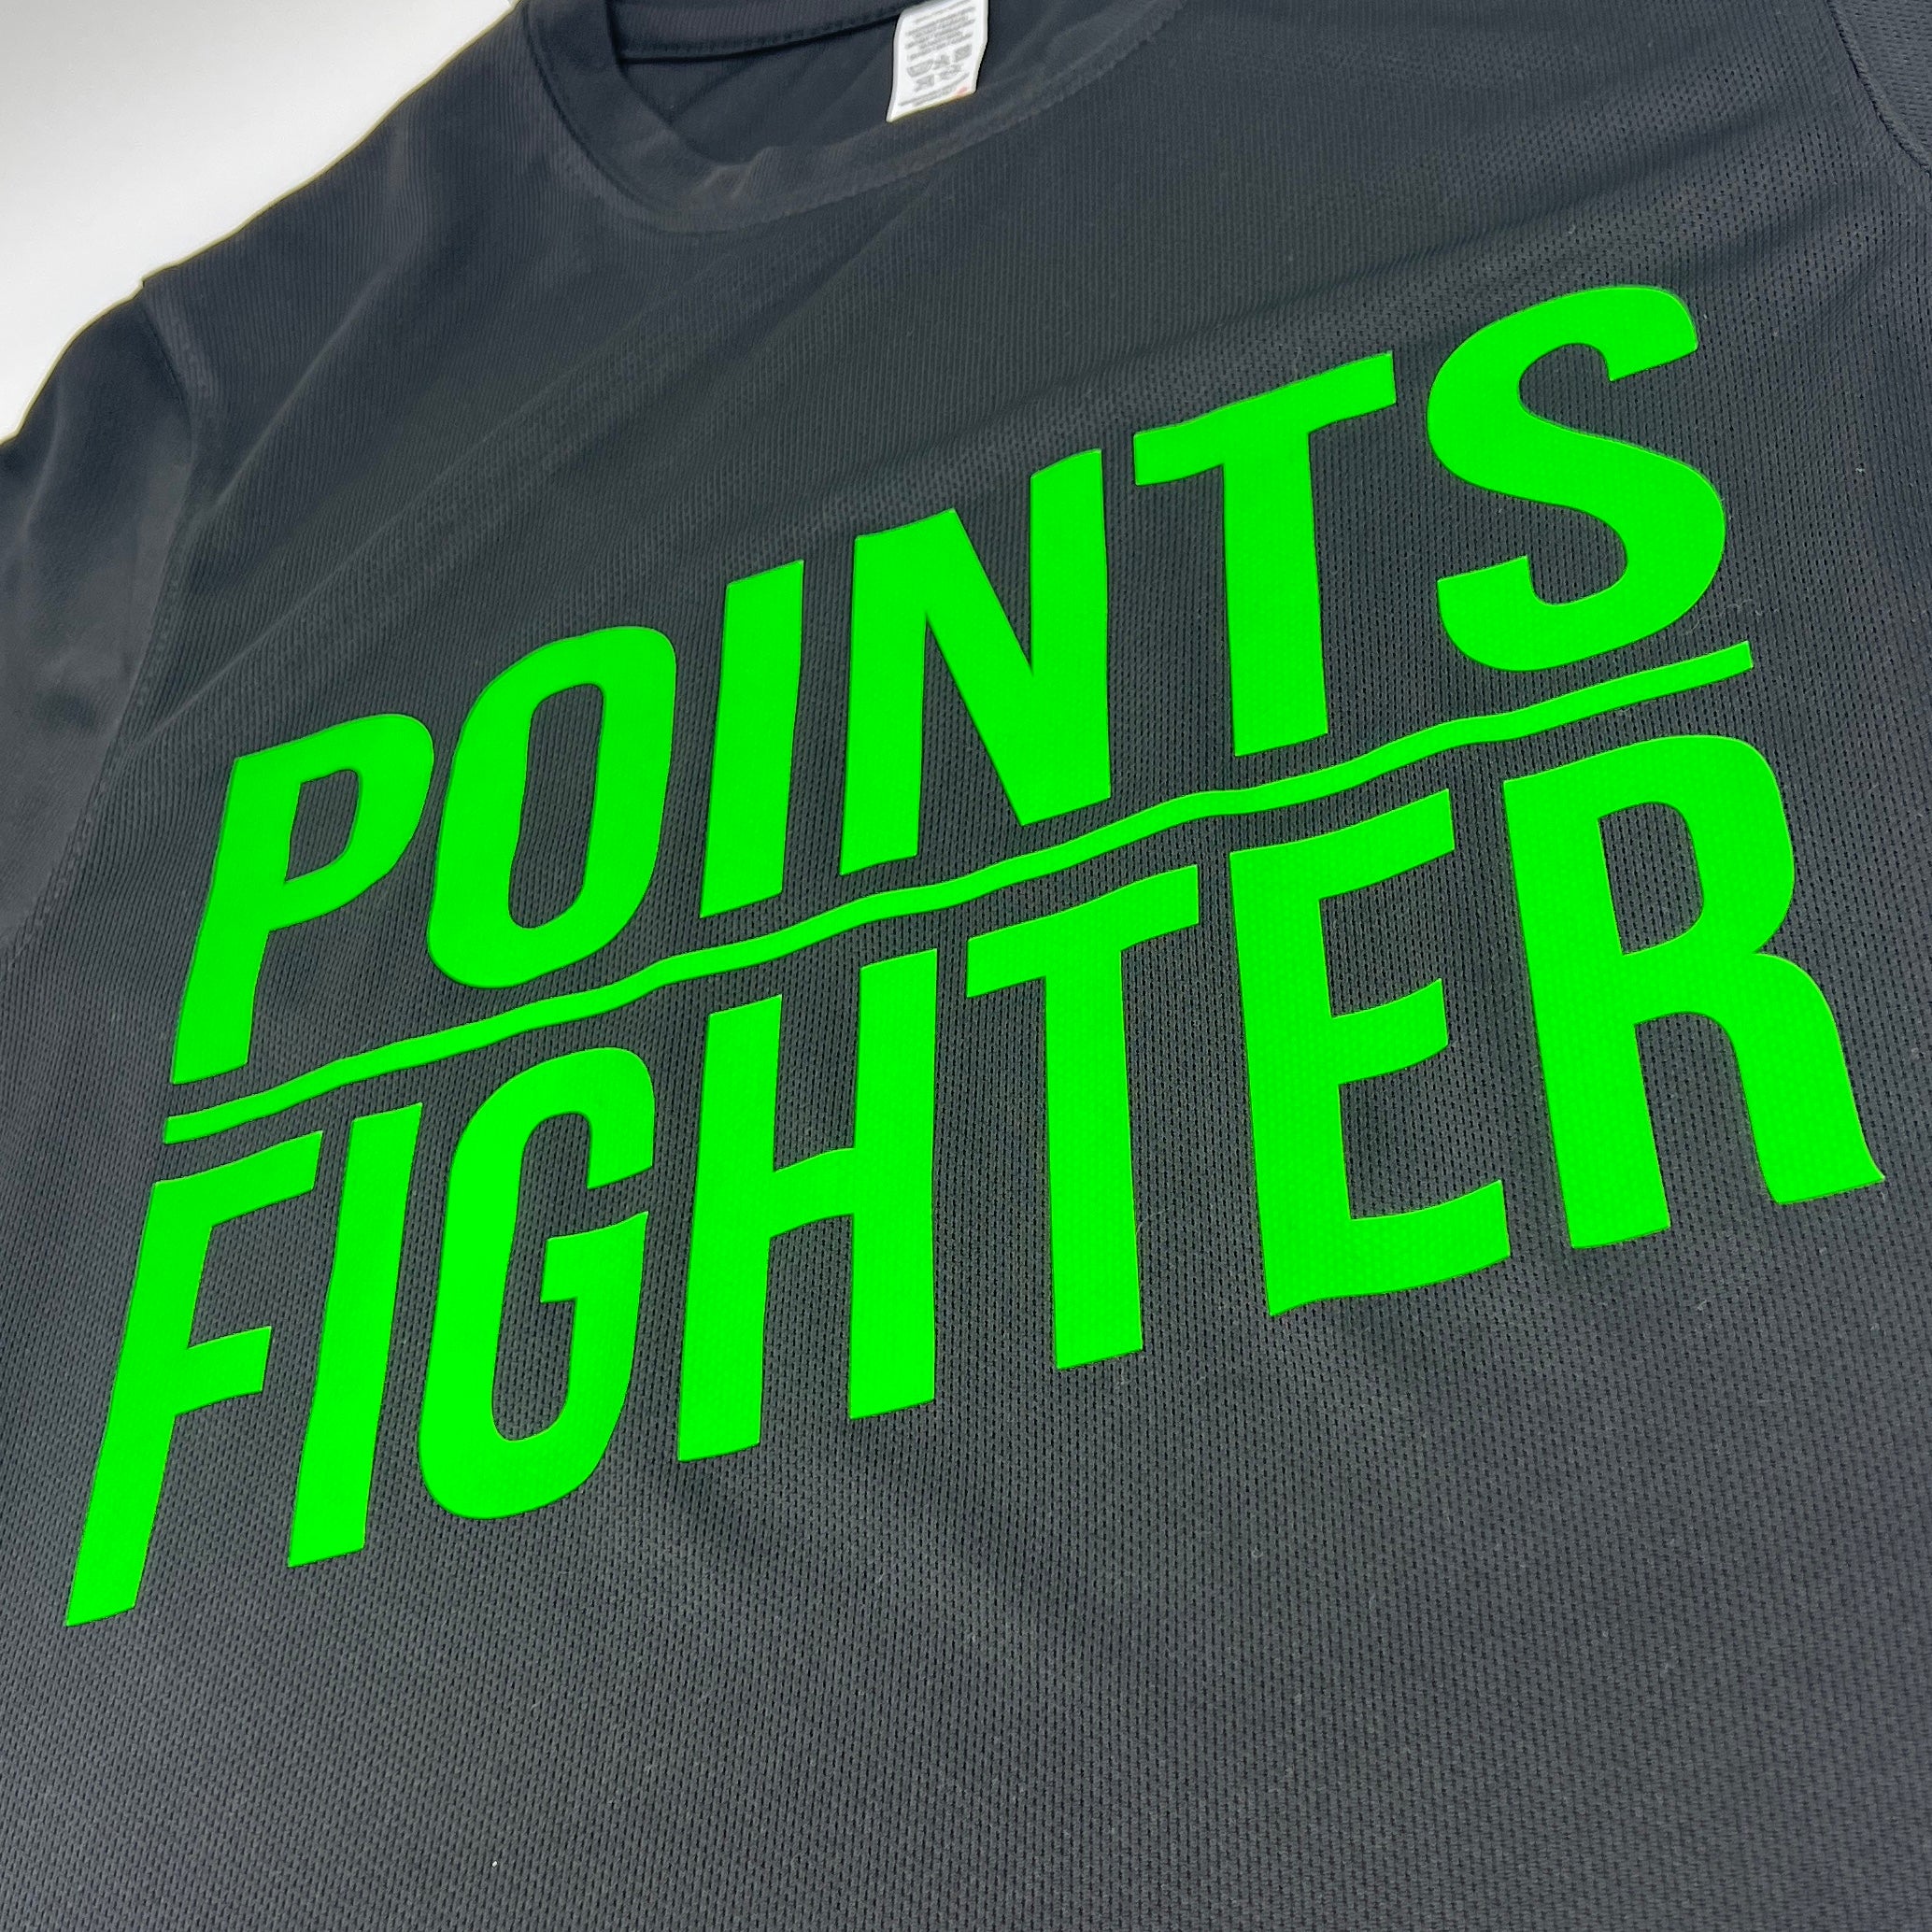 Points Fighter Tech T-Shirt - Neon Green